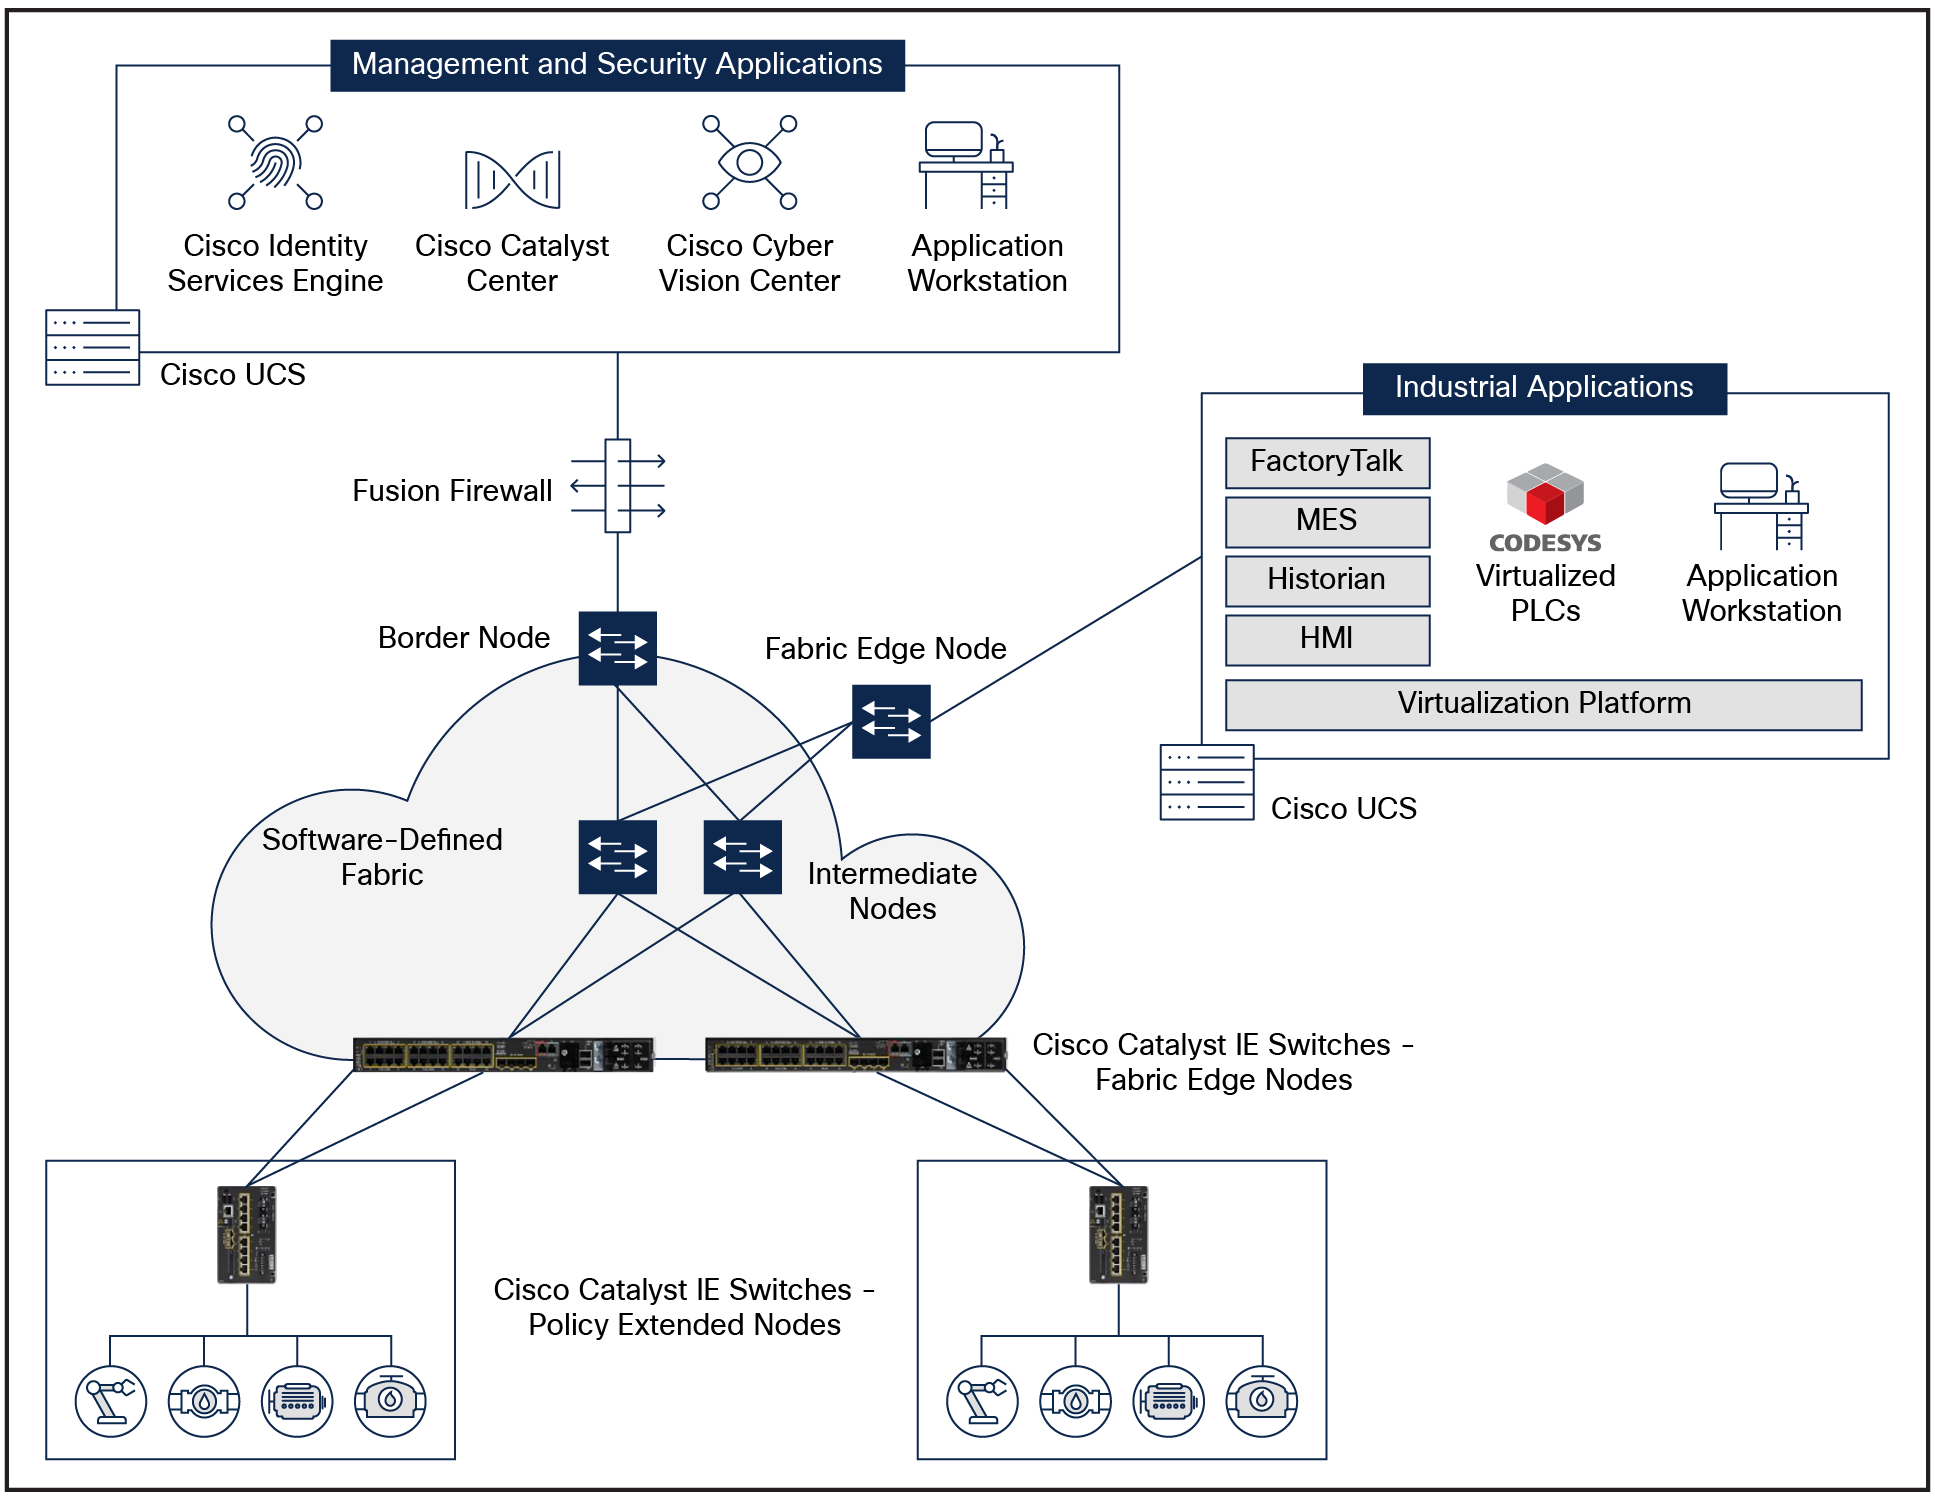 Cisco software-defined industrial network architecture facilitates IACS virtualization